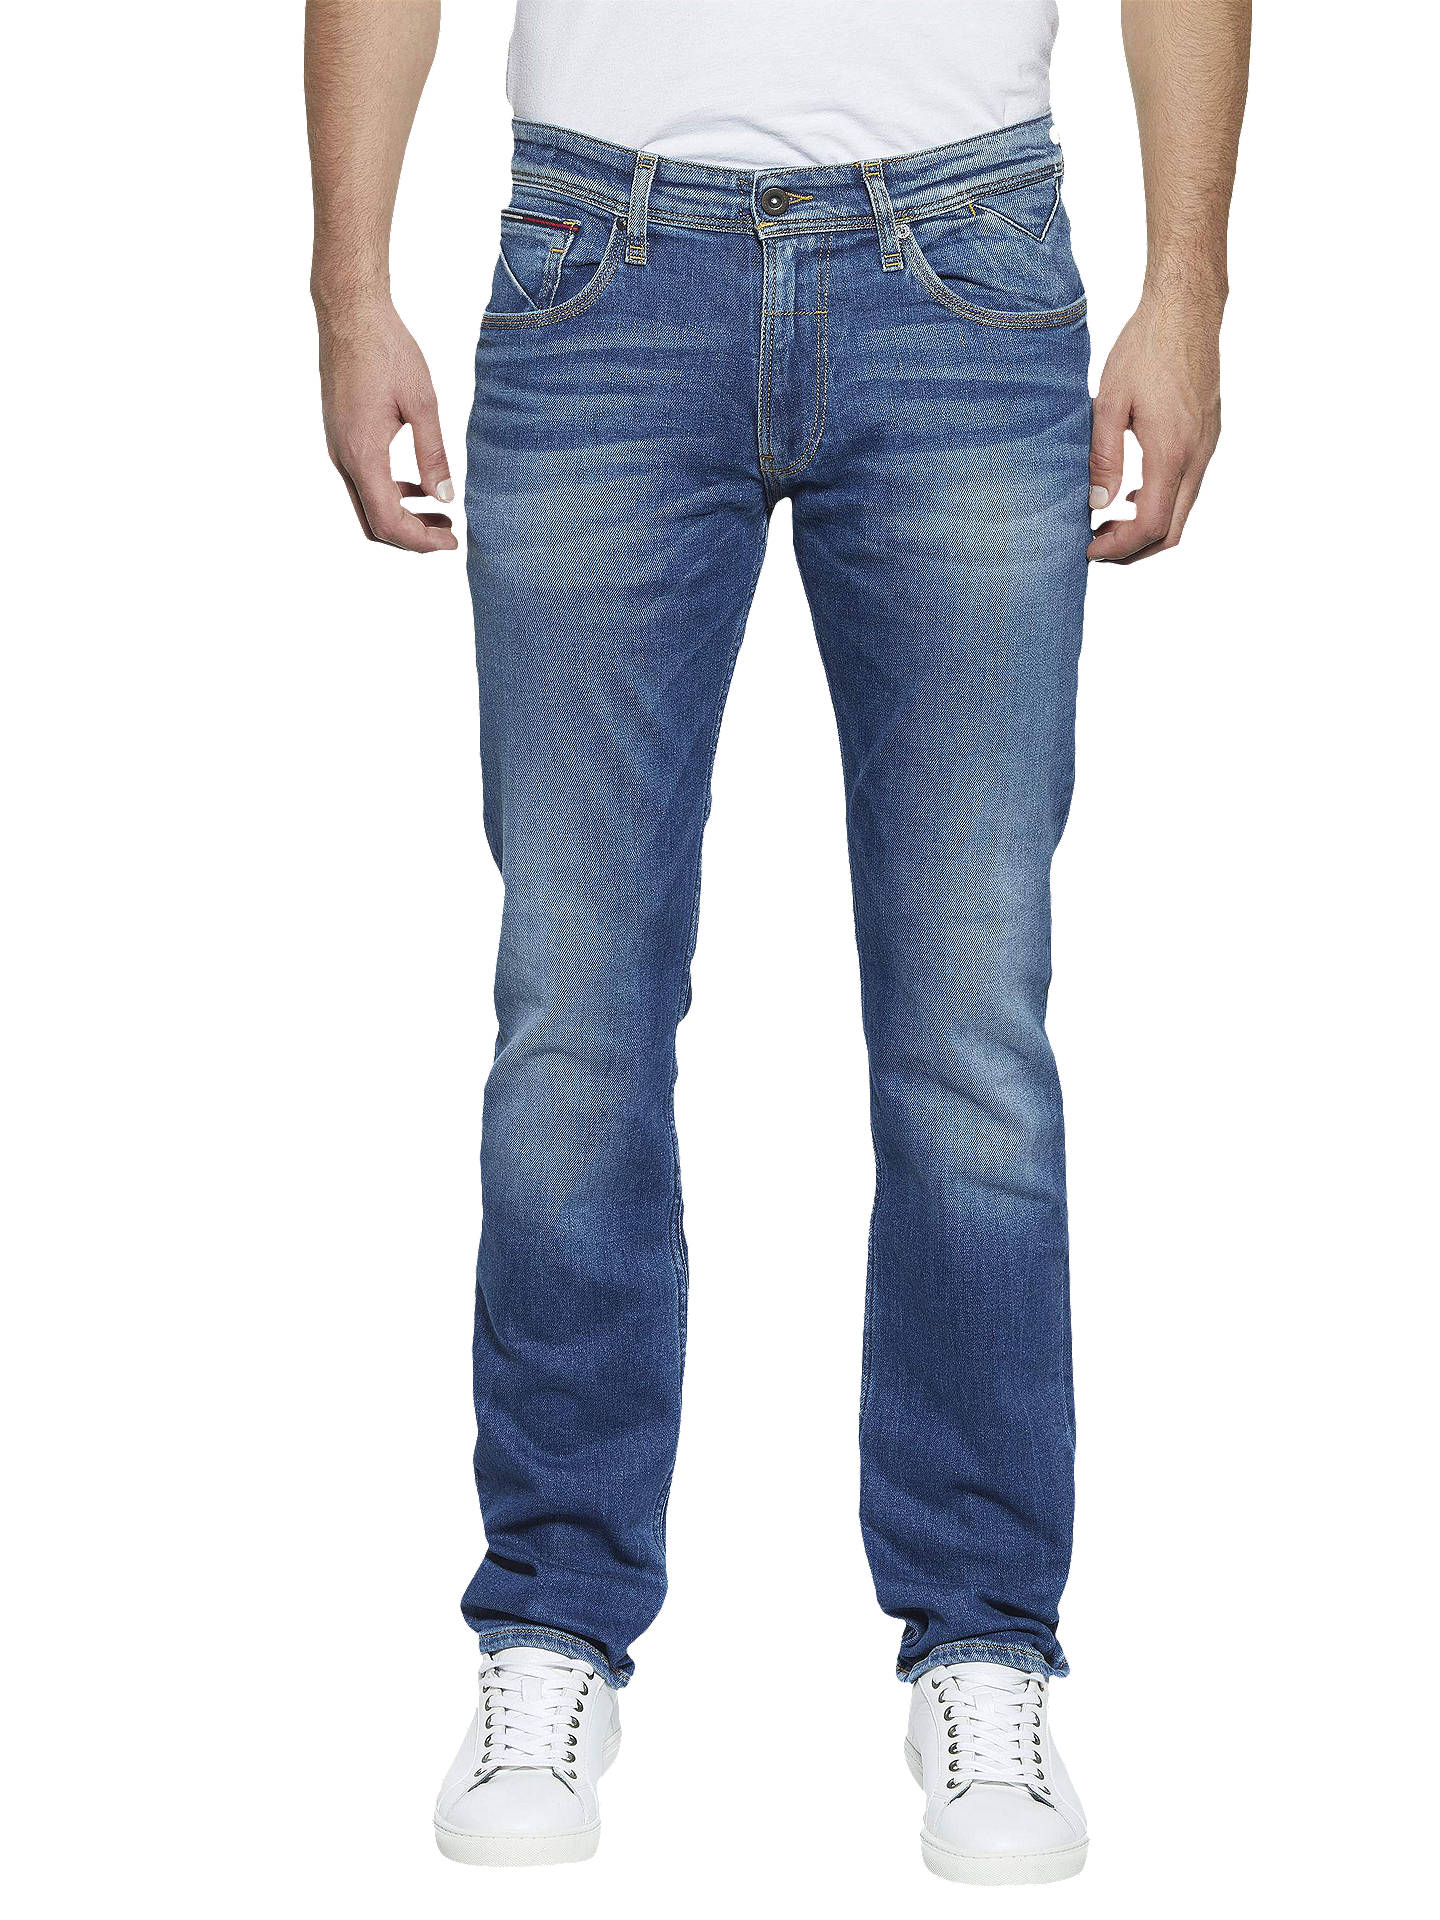 Tommy Jeans Original Straight Ryan Jeans, Bumbc at John Lewis & Partners